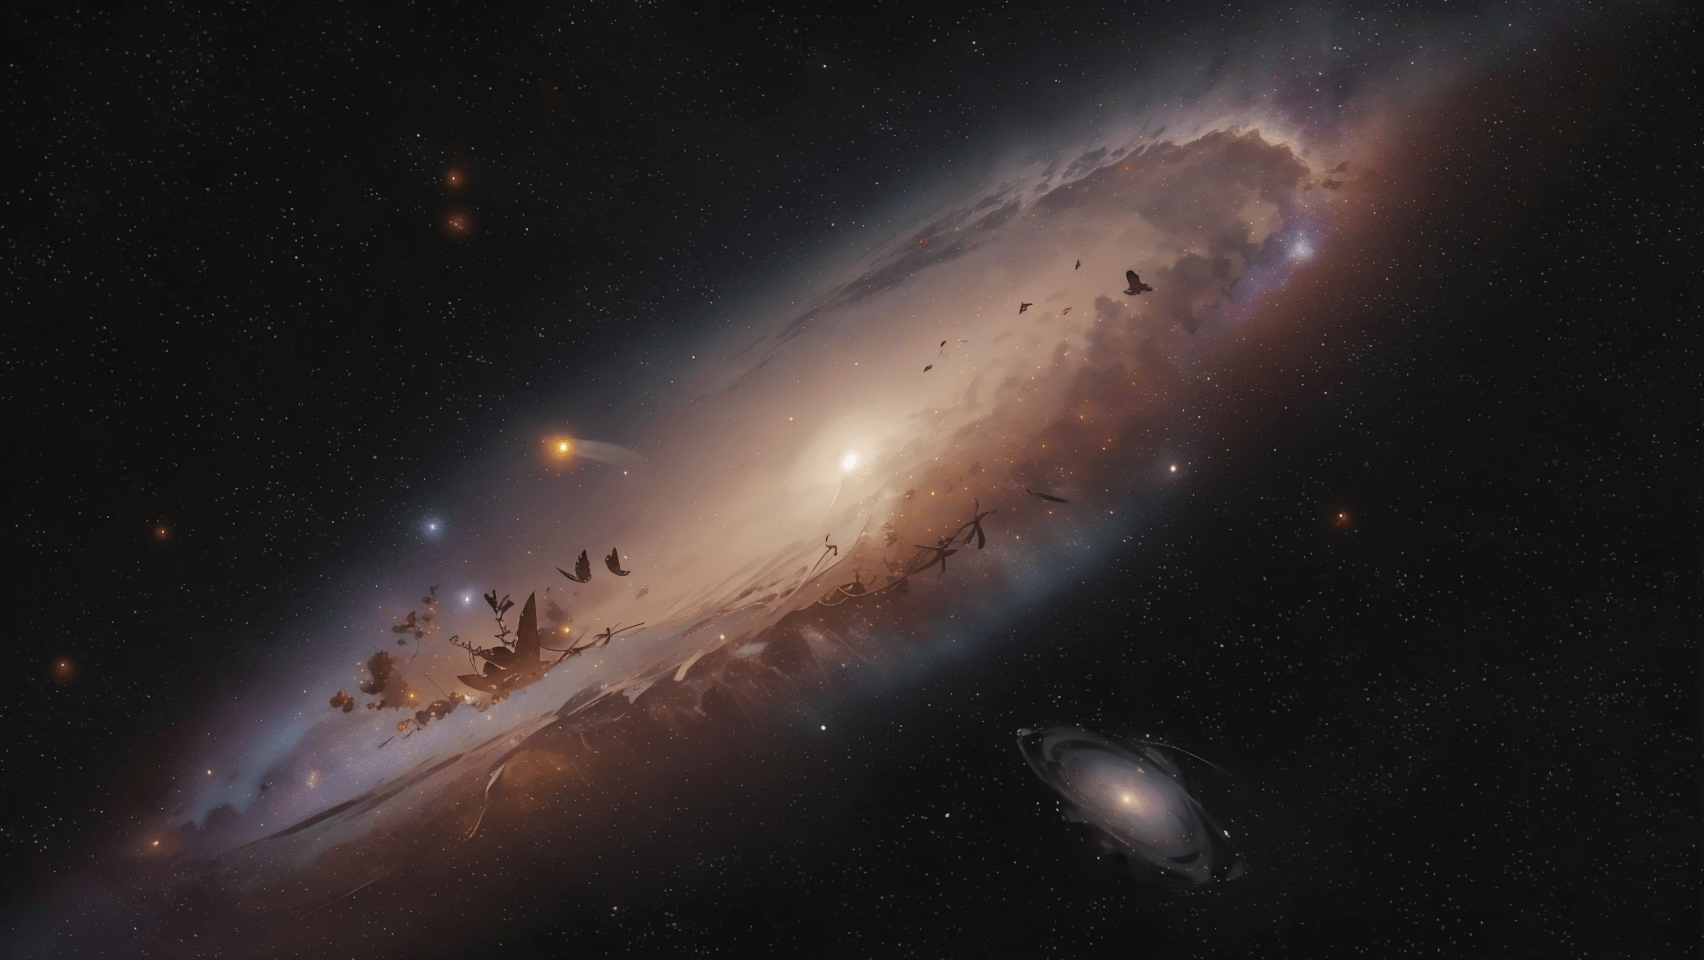 Tidal Streams and Stellar Shells in the Andromeda Galaxy